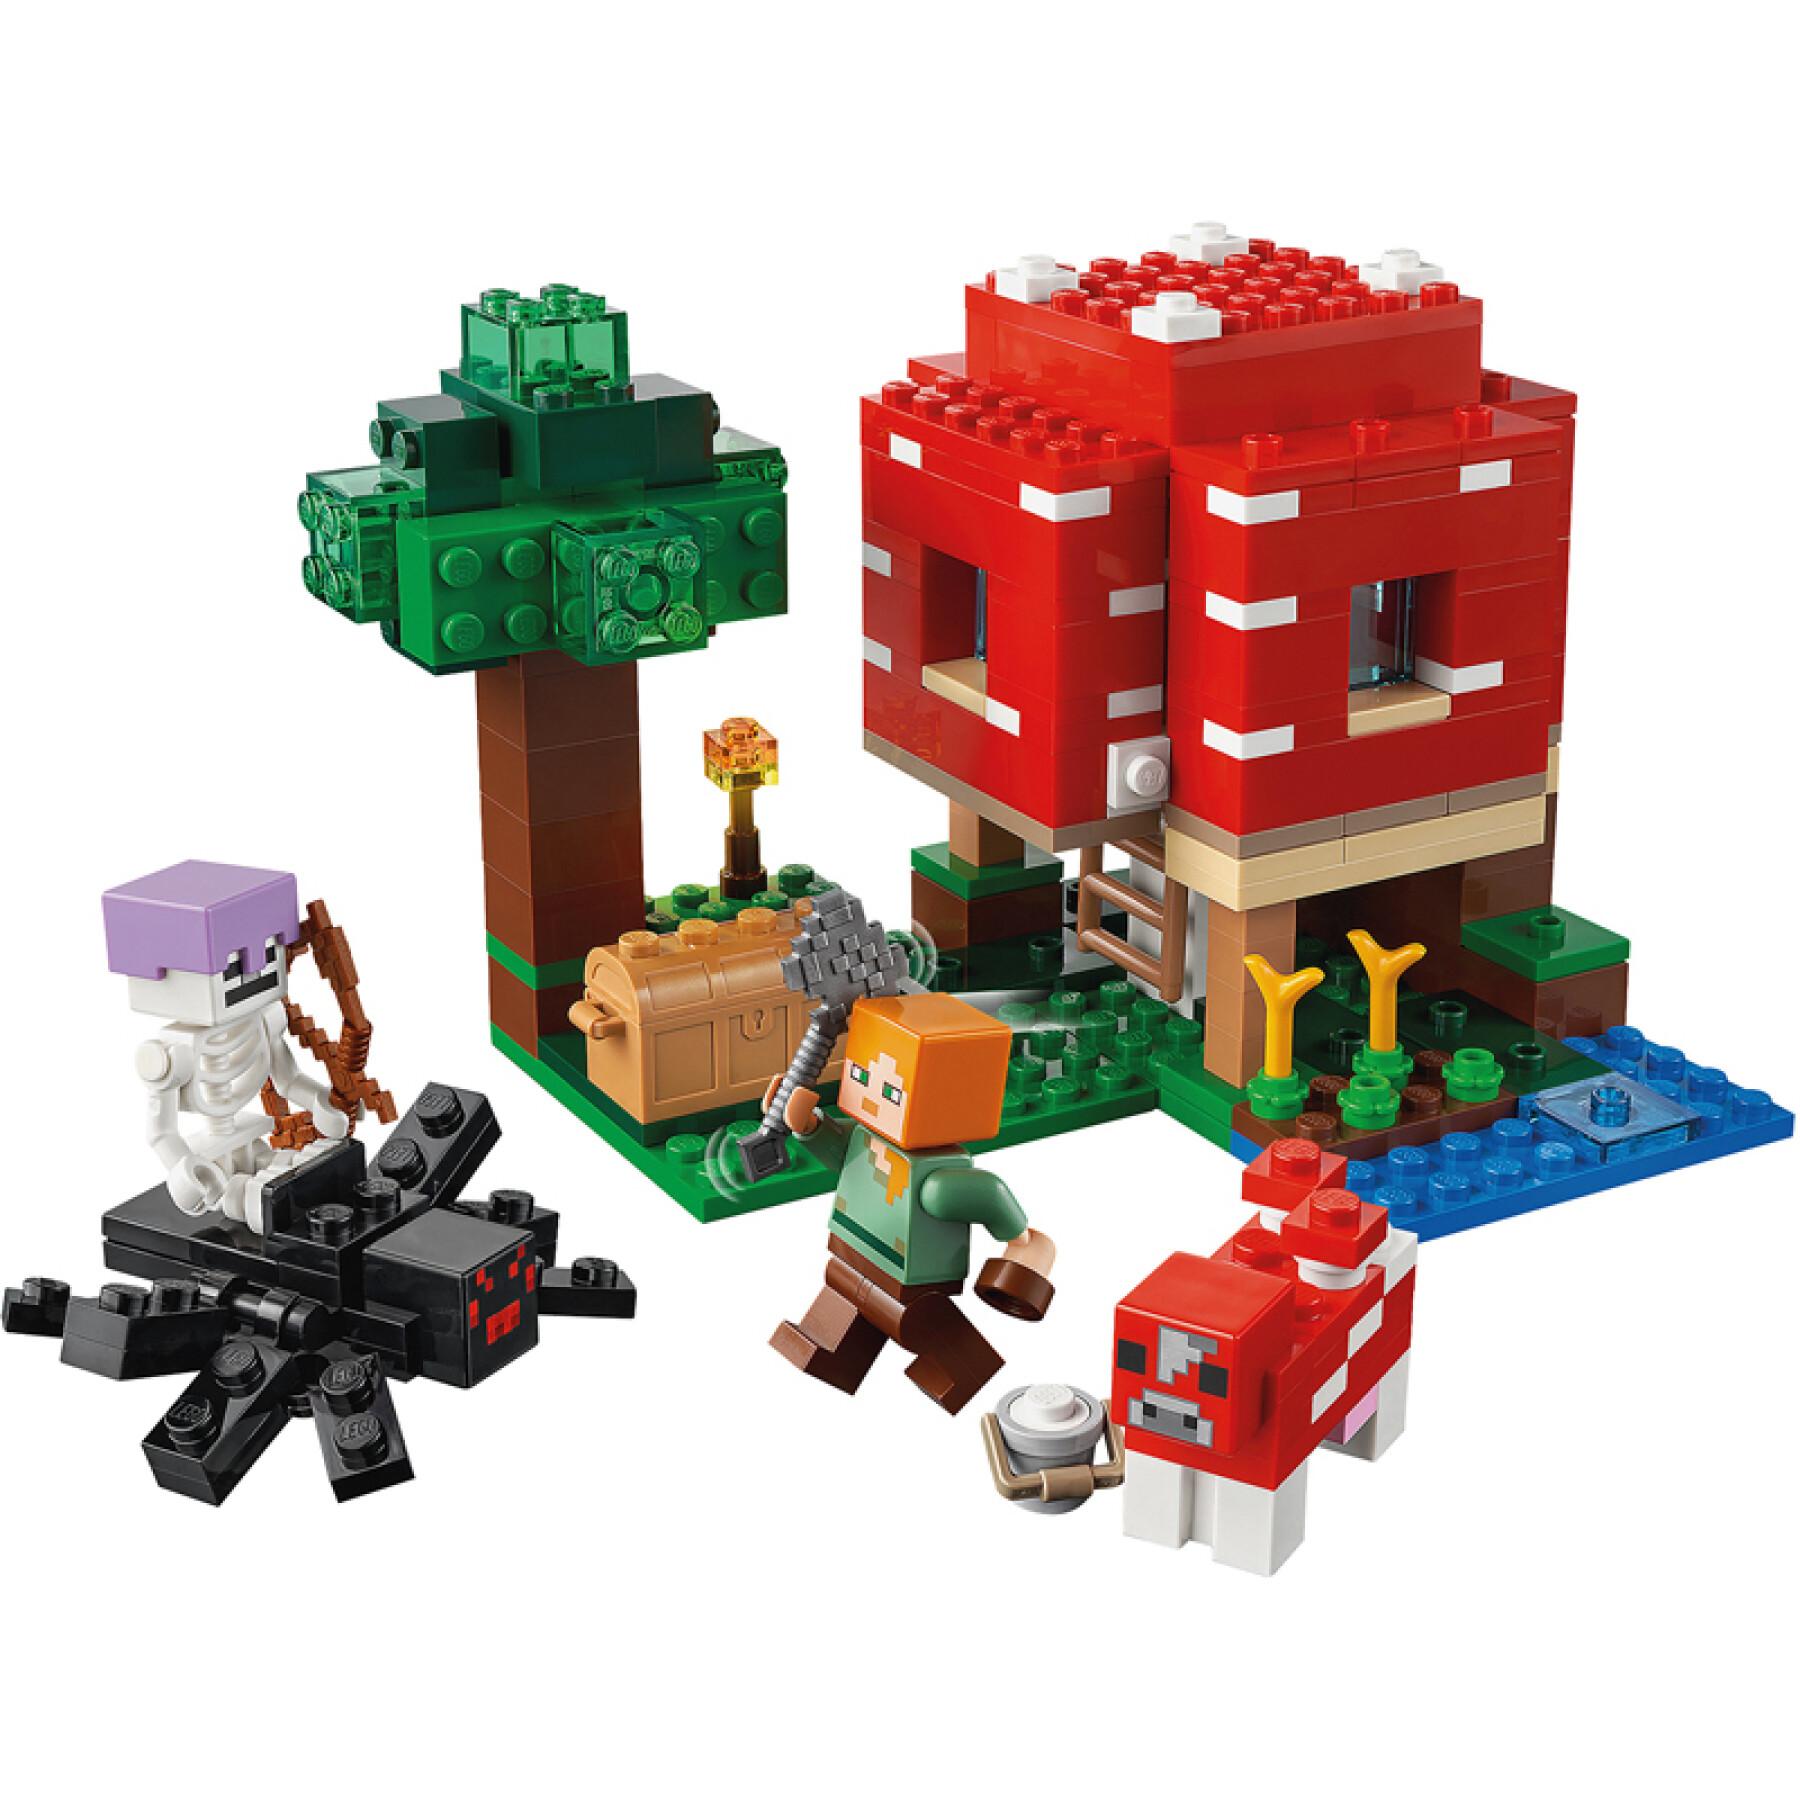 Mushroom house building sets Lego Minecrafte